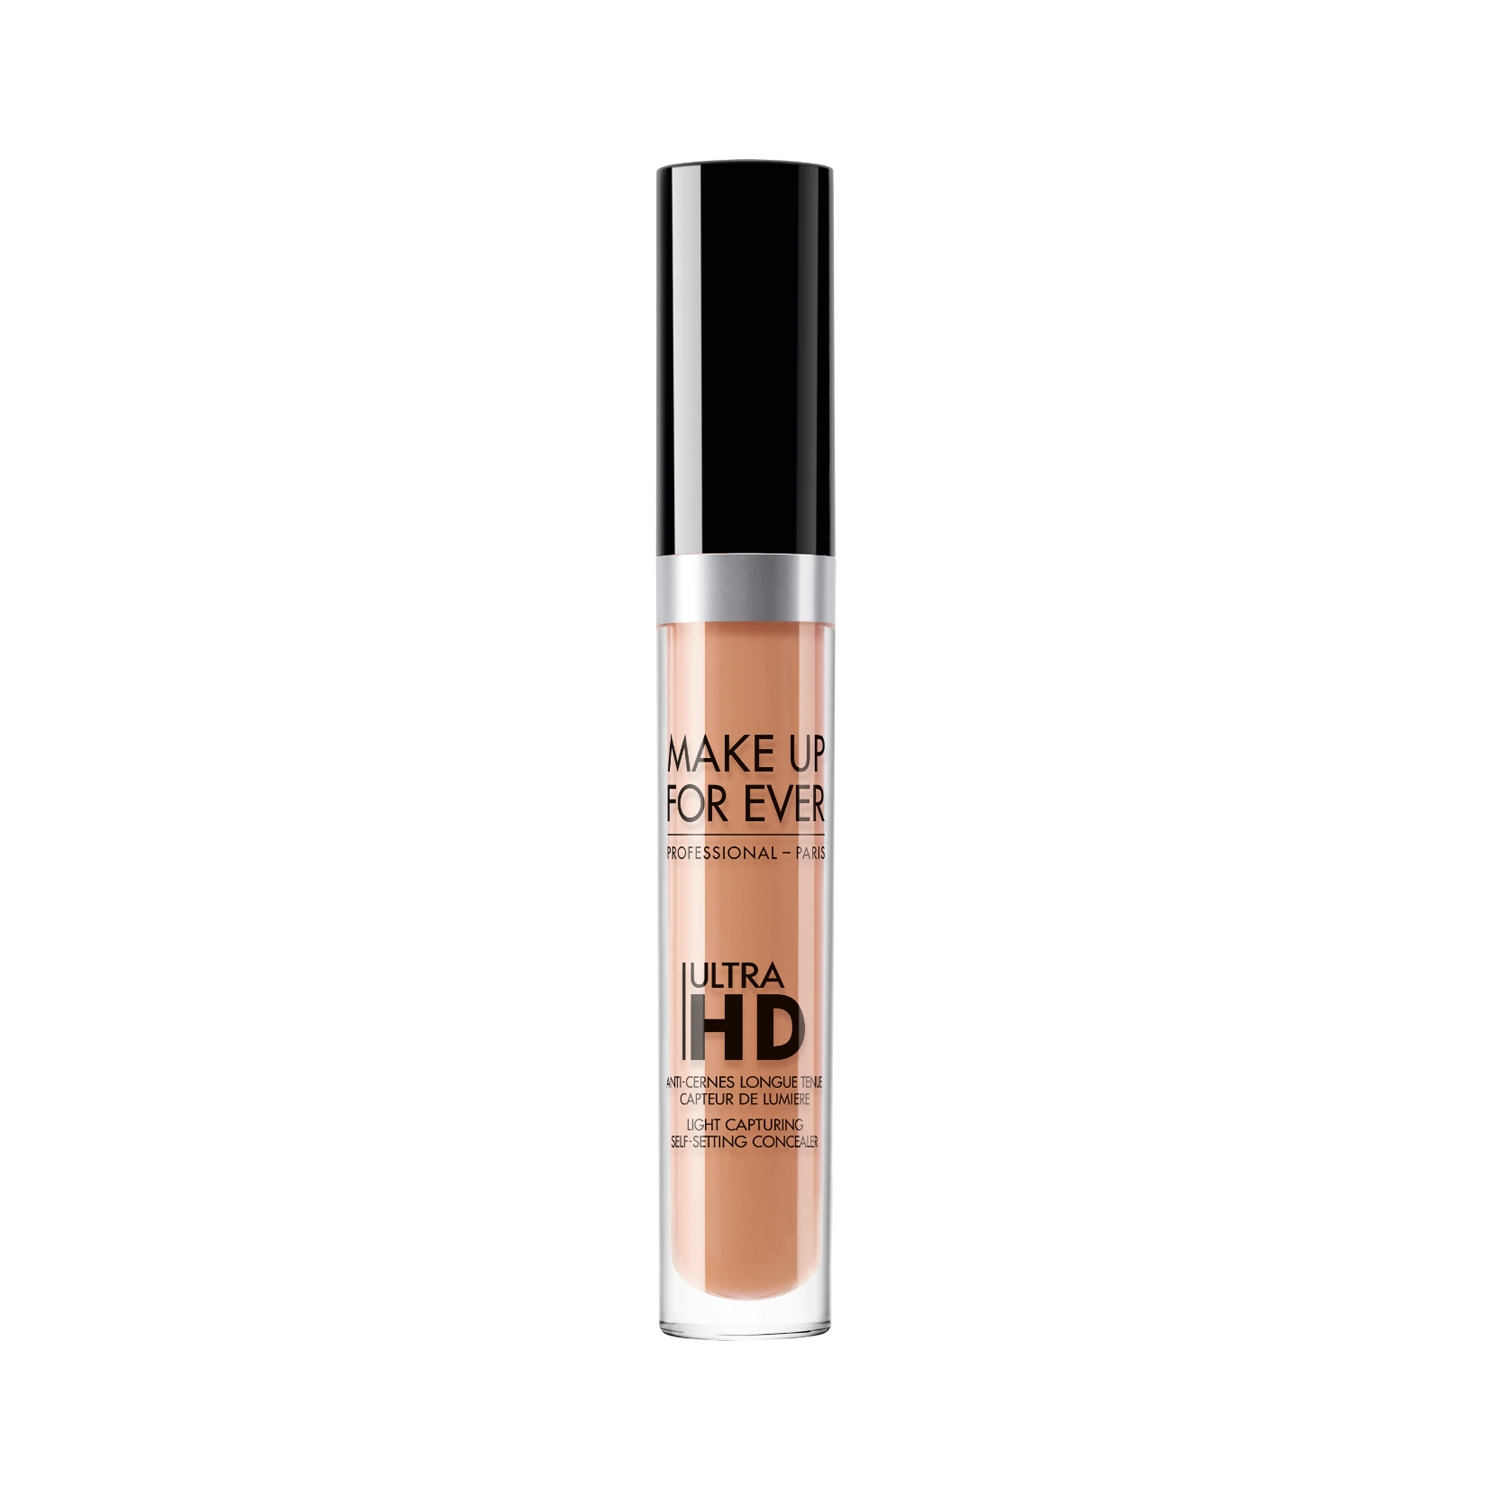 Make Up For Ever | Make Up For Ever Ultra HD Concealer Invisible Cover Concealer - 42 Caramel (5ml)